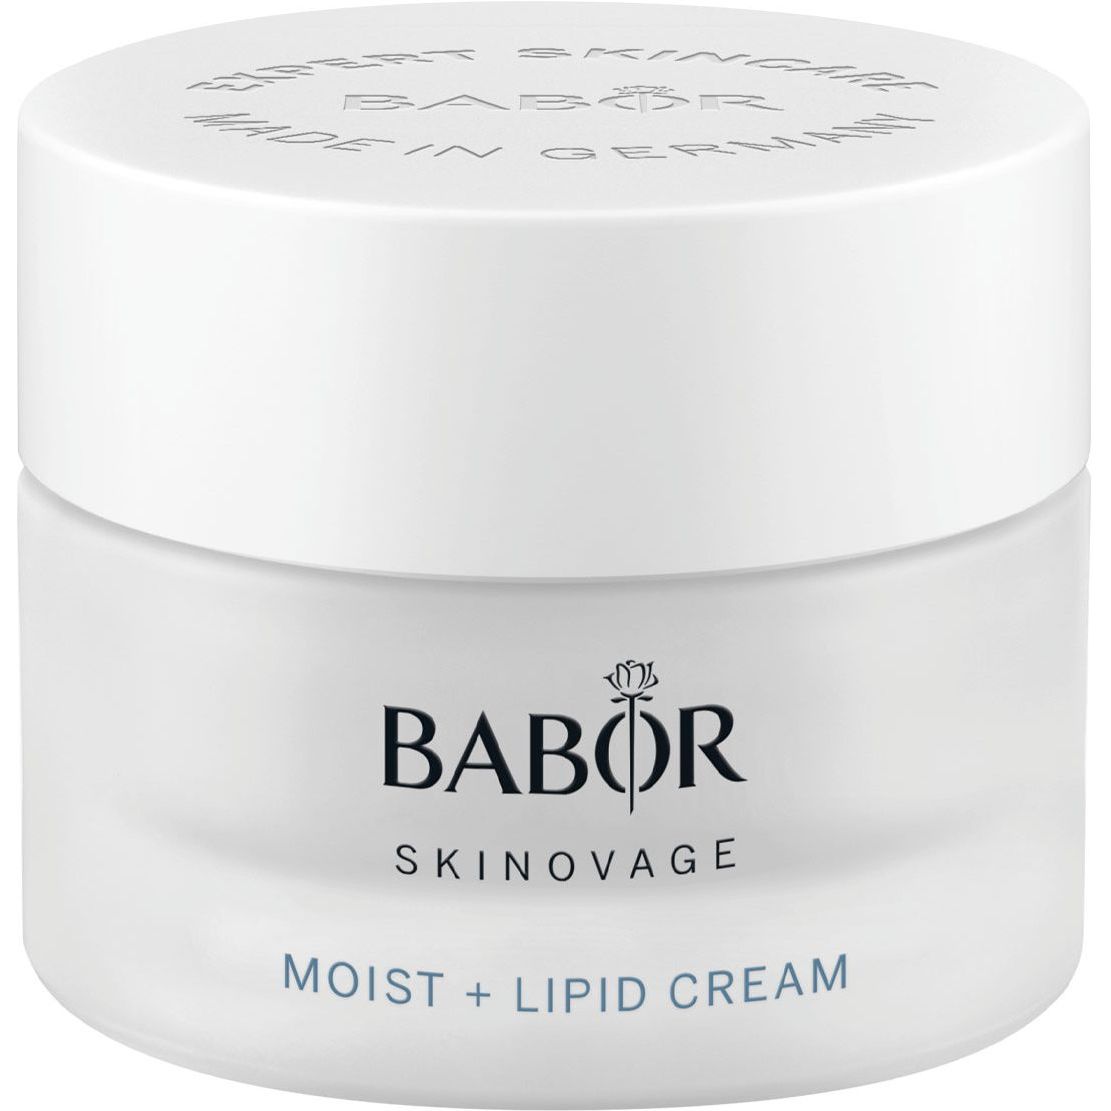 Зволожувальний крем Babor Skinovage Moisturizing Lipid Cream 50 мл - фото 1